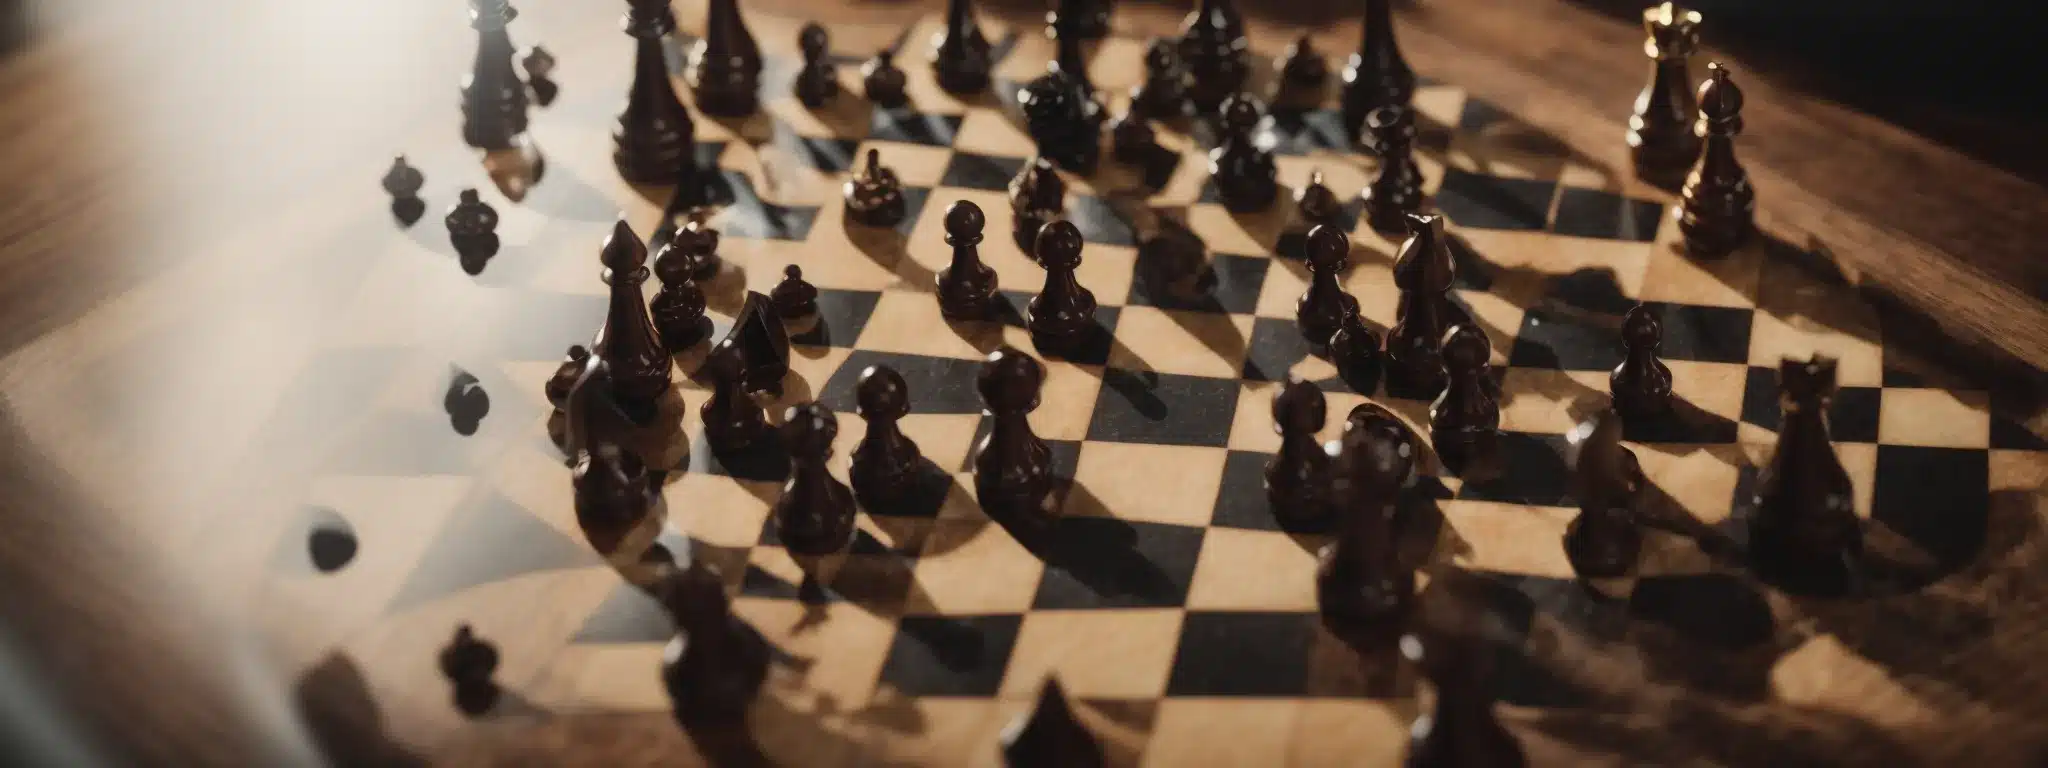 A Solemn Chessboard With Distinct Pieces Set In Strategic Positions, Symbolizing The Battleground Of Market Segmentation.